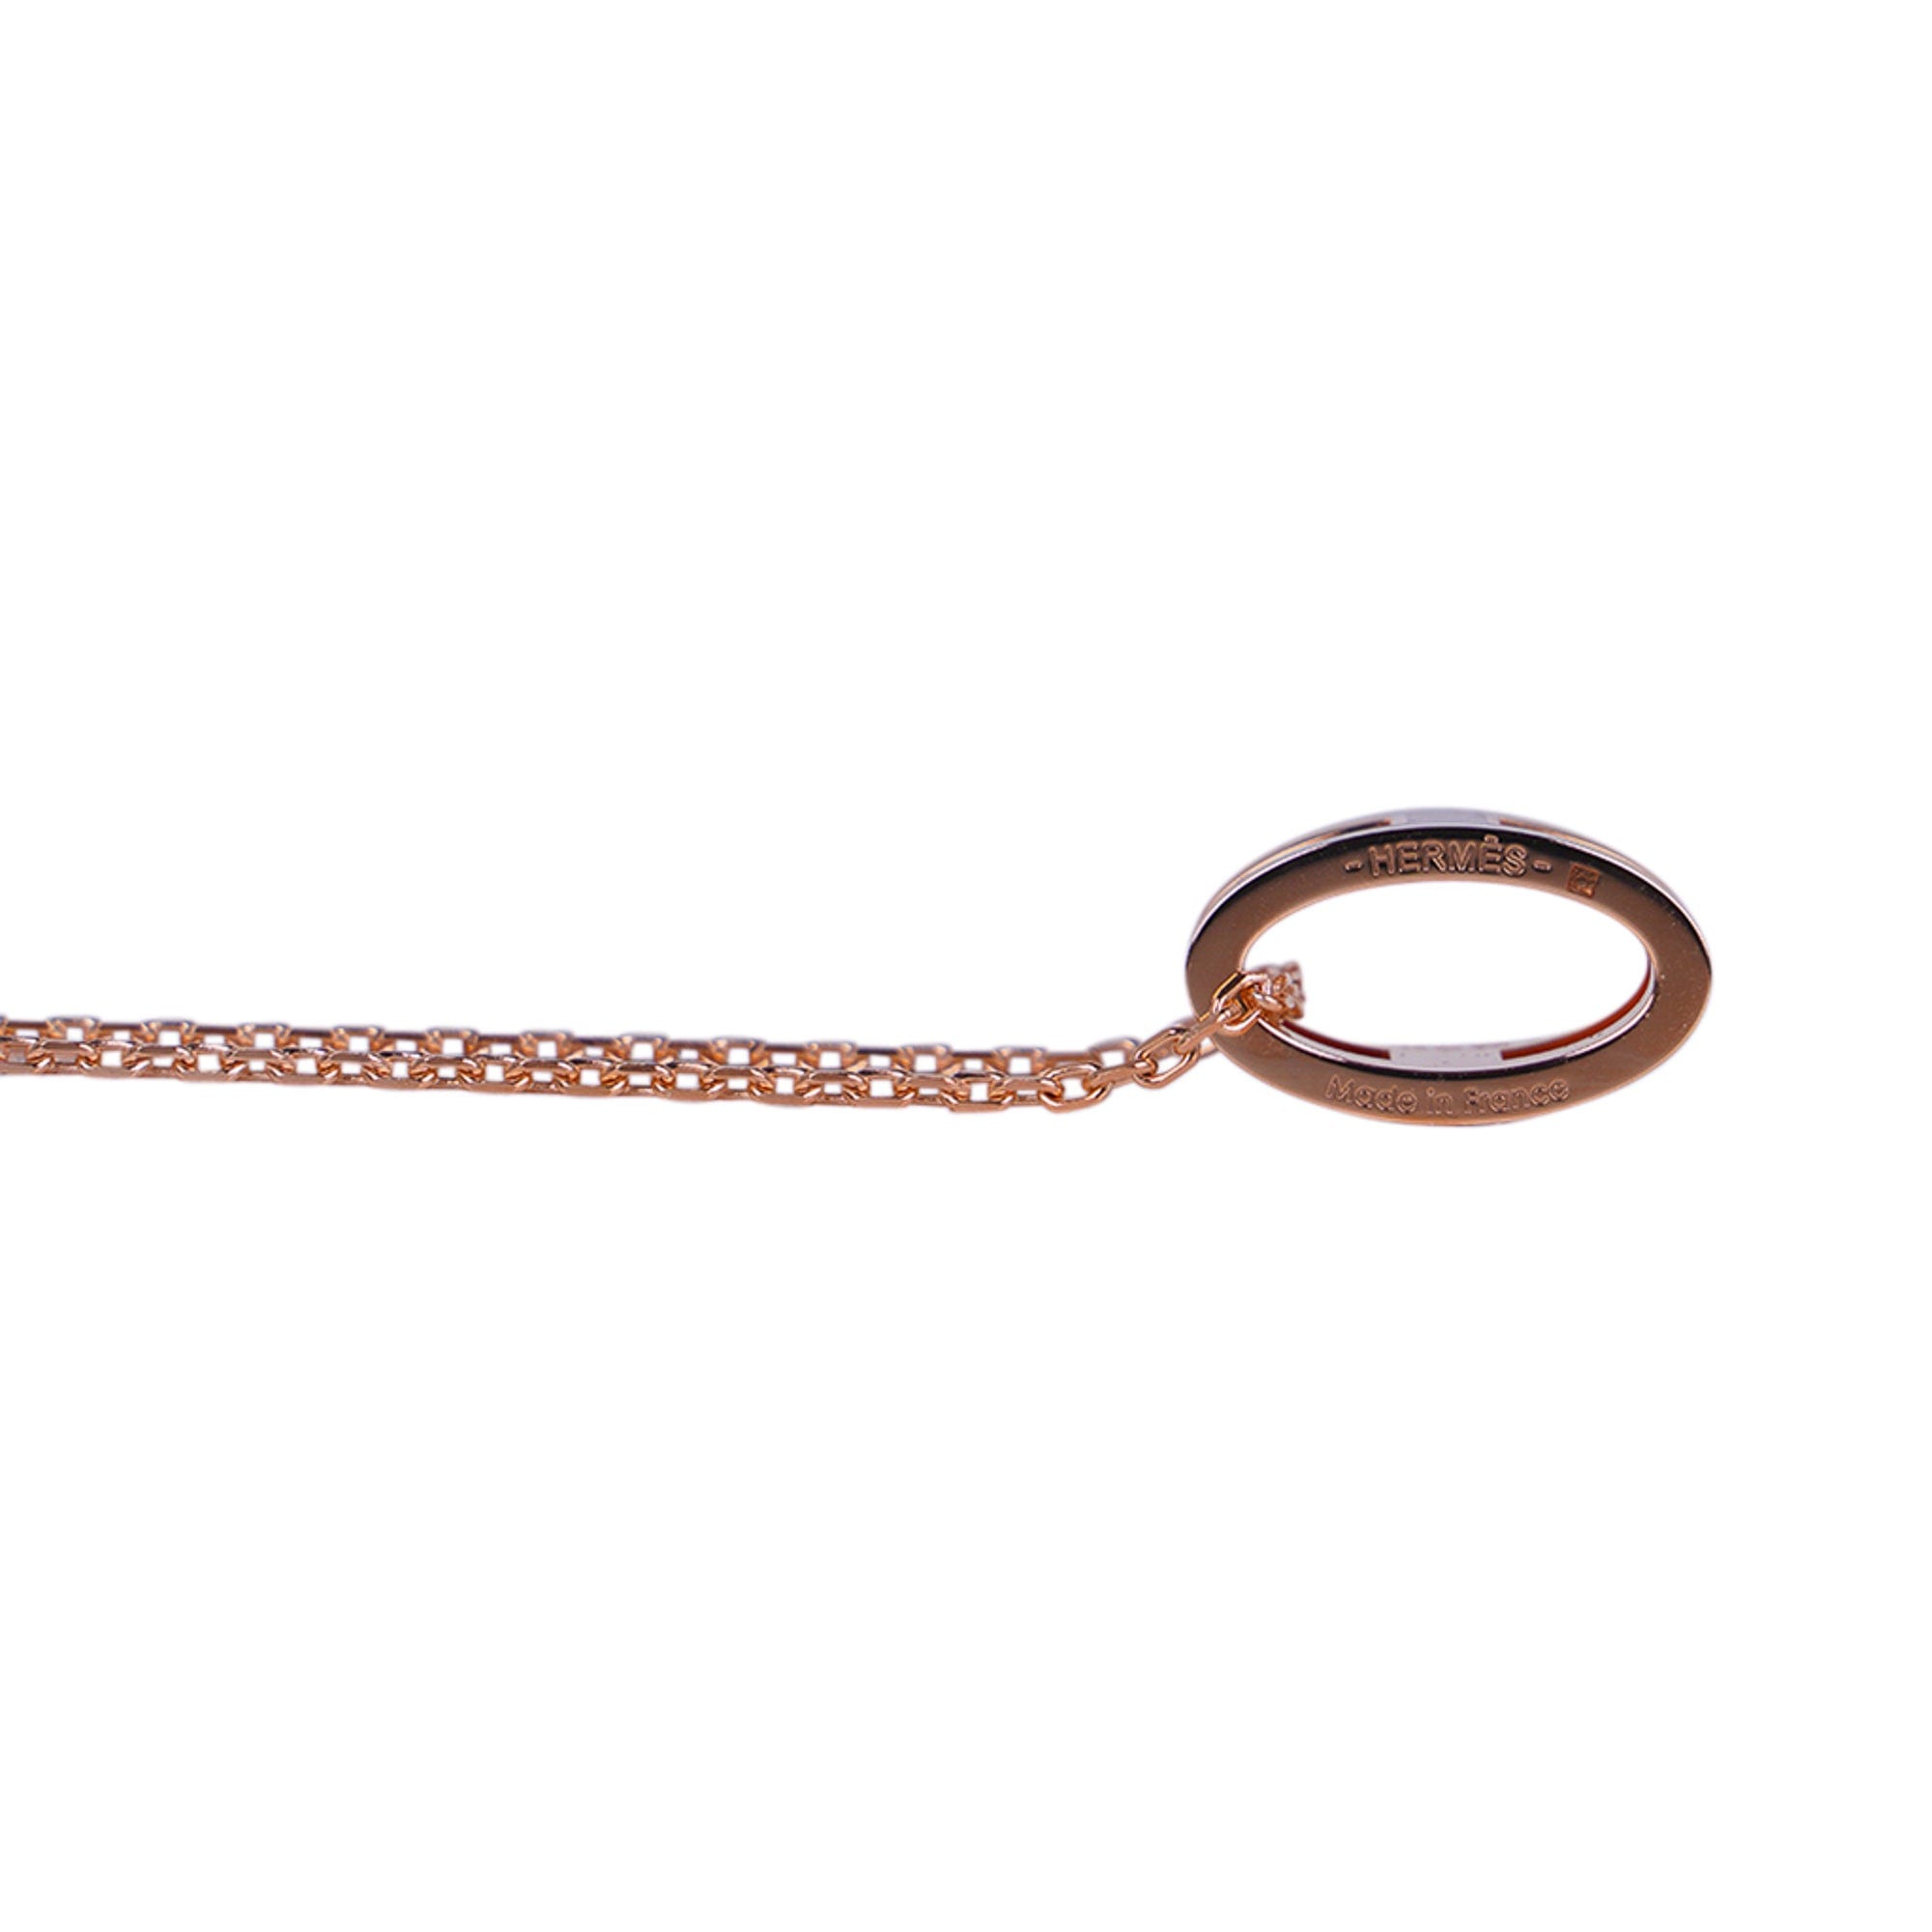 CELINE Logo Circle Pendant Gold Plated Chain Necklace 22cm